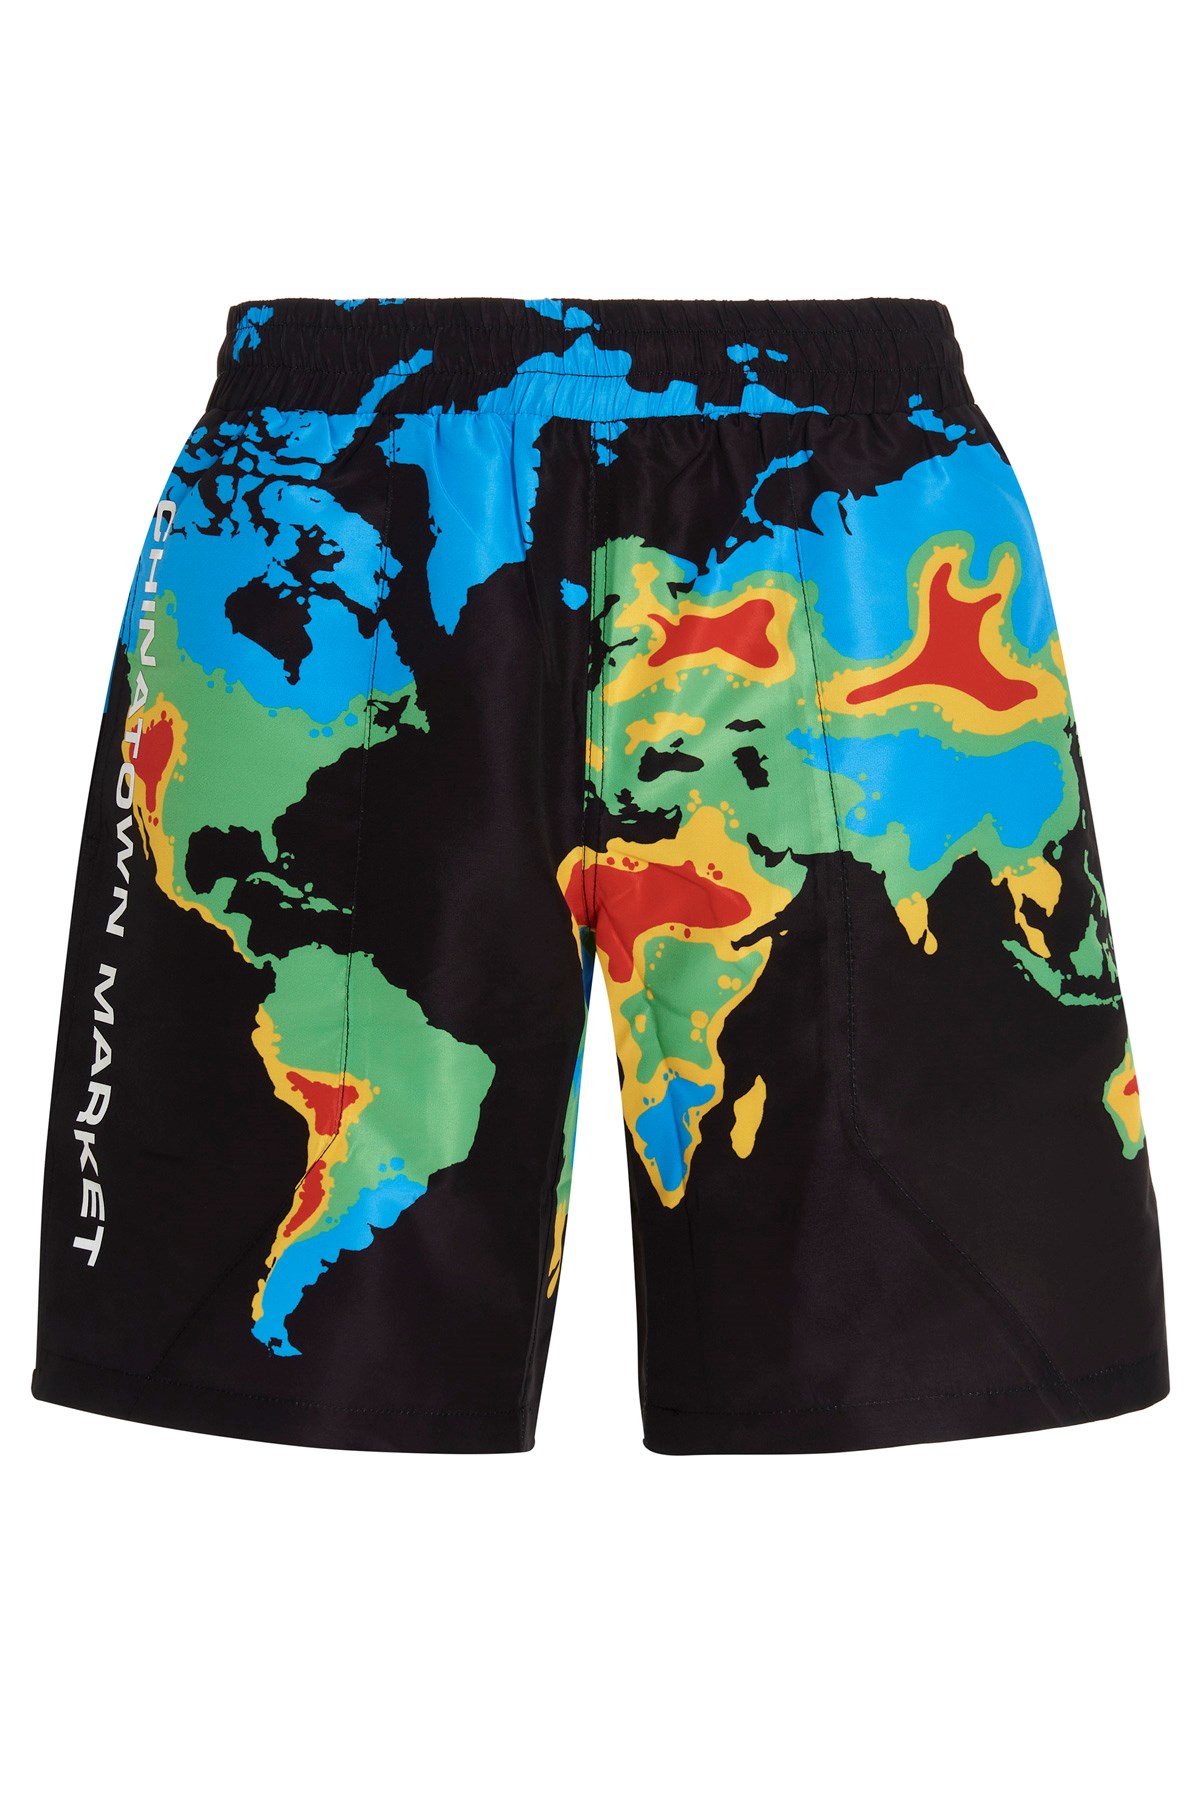 CHINATOWN MARKET 'Global Citizen Heat Map’ Capsule Bermuda Shorts